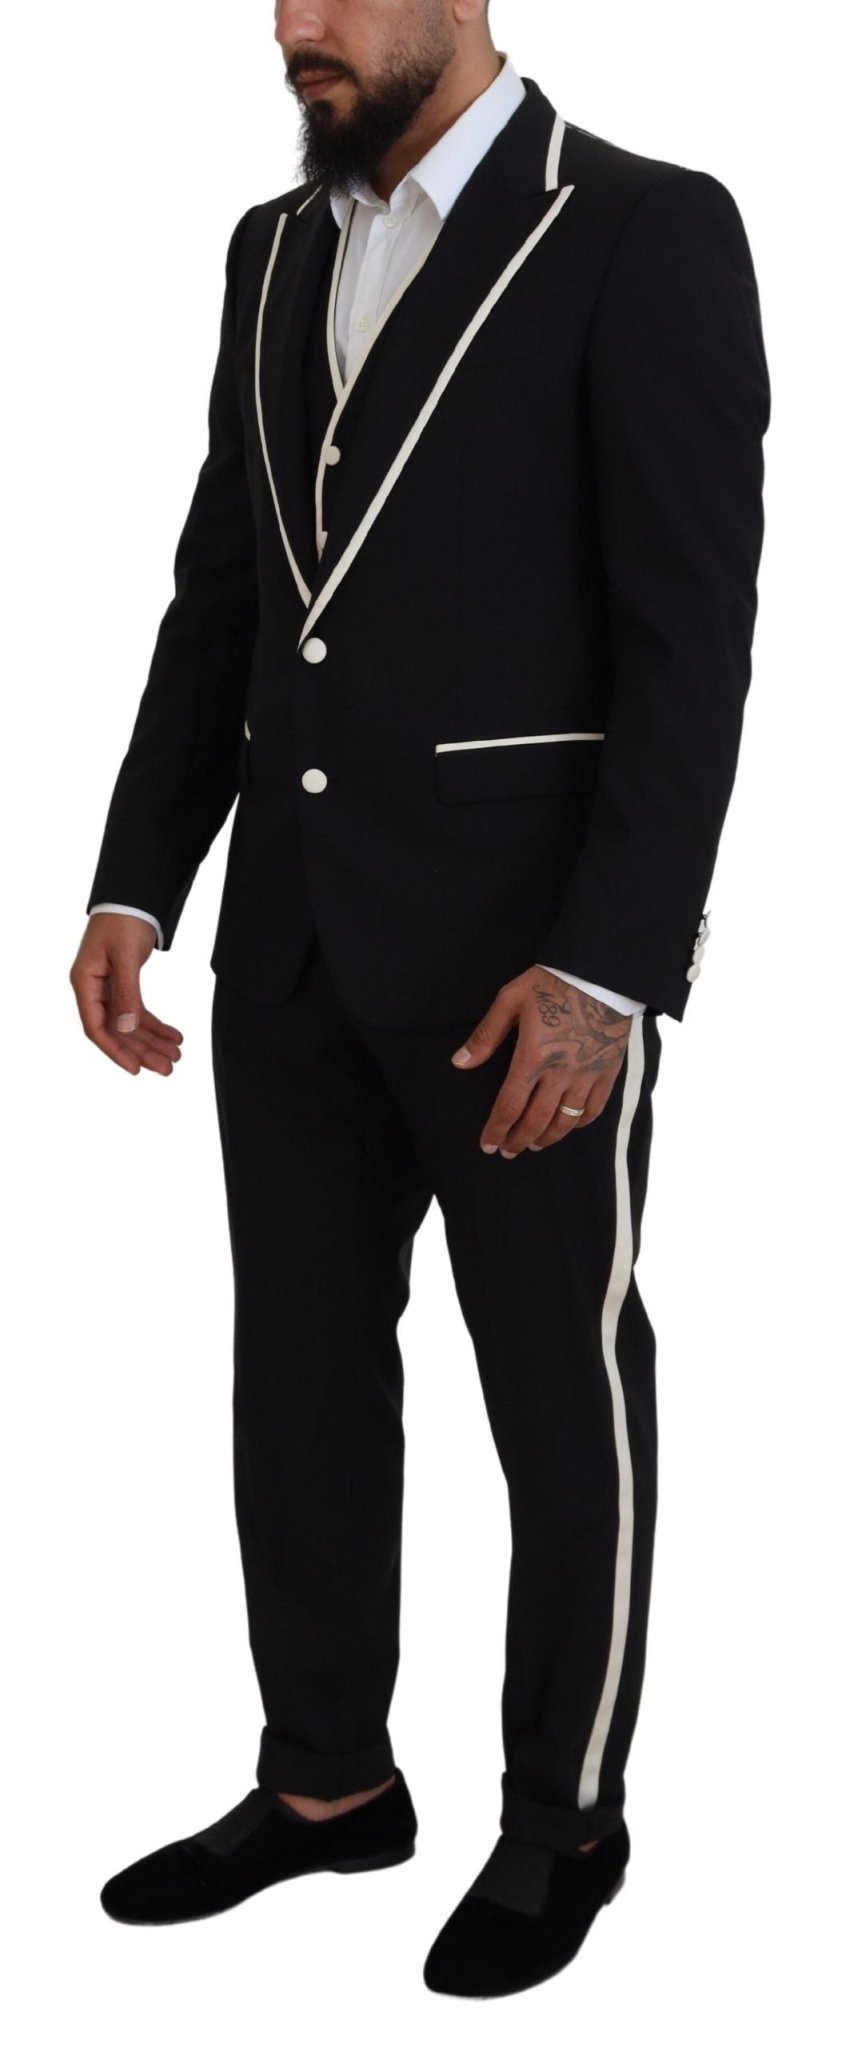 Dolce & Gabbana Elegant Black and White Slim Fit Three Piece Suit